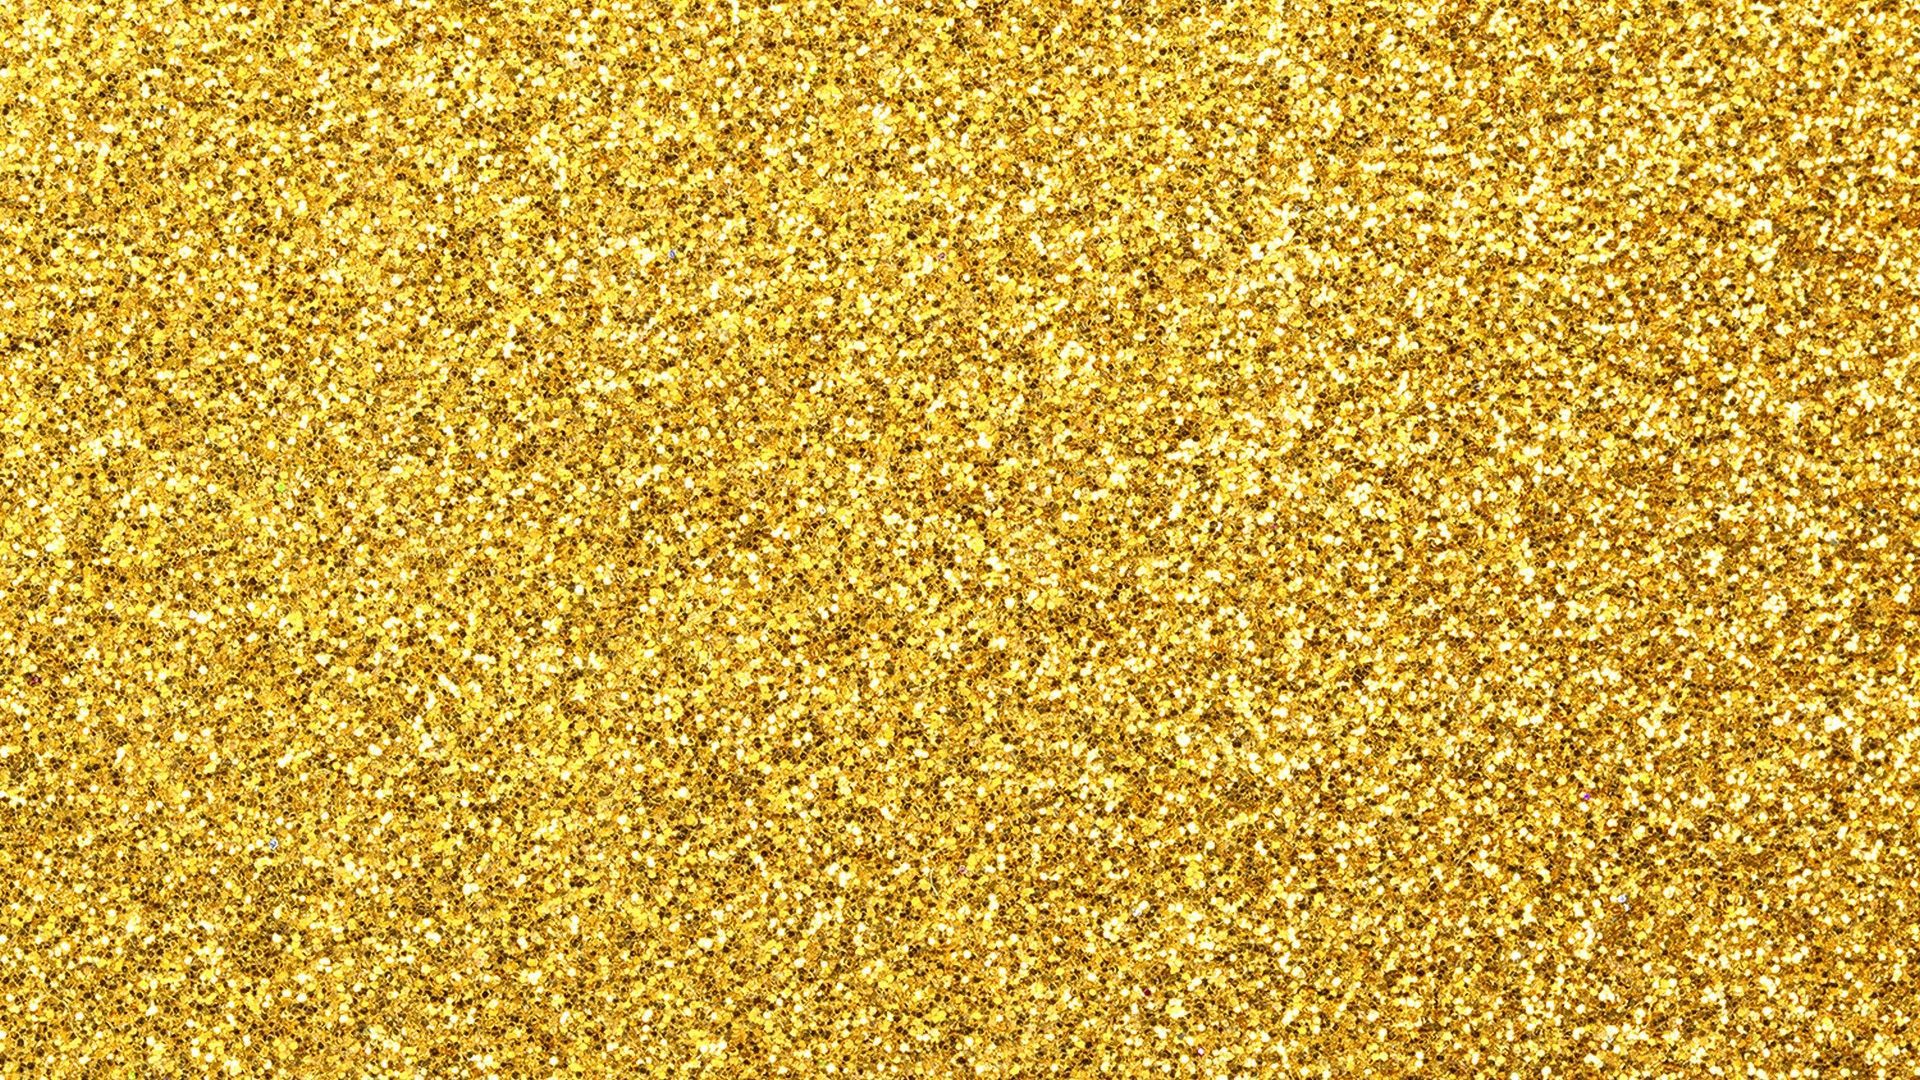 HD Wallpaper Gold Glitter Live Wallpaper HD. iPhone wallpaper glitter, Gold glitter wallpaper iphone, Glitter wallpaper